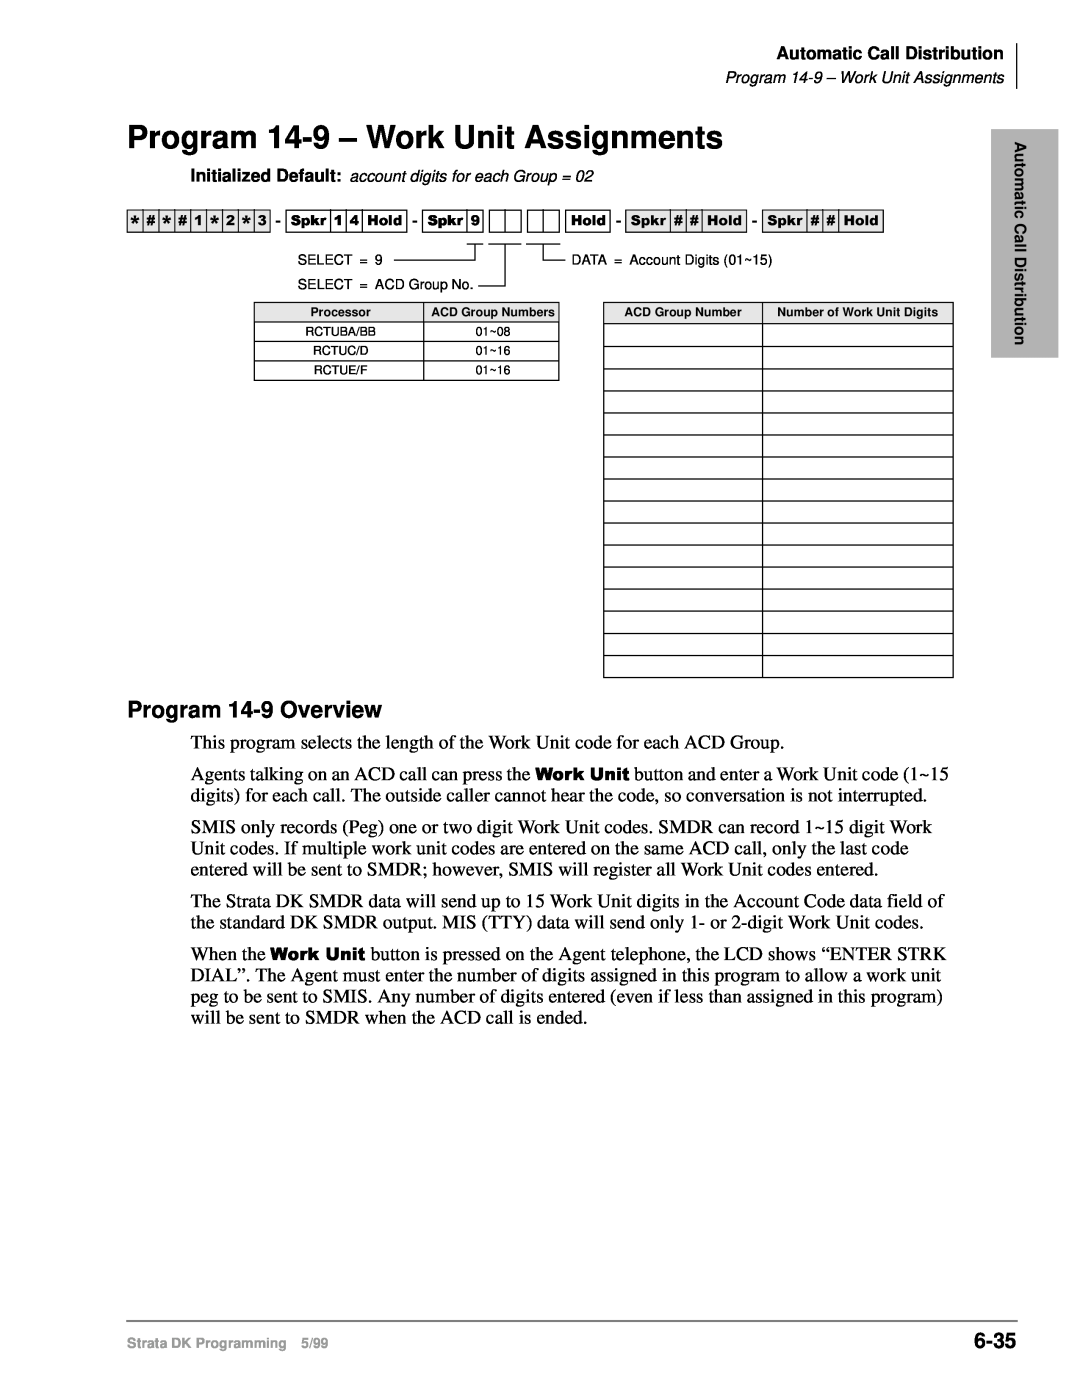 Toshiba dk14 manual Program 14-9– Work Unit Assignments, Program 14-9Overview, 6-35 